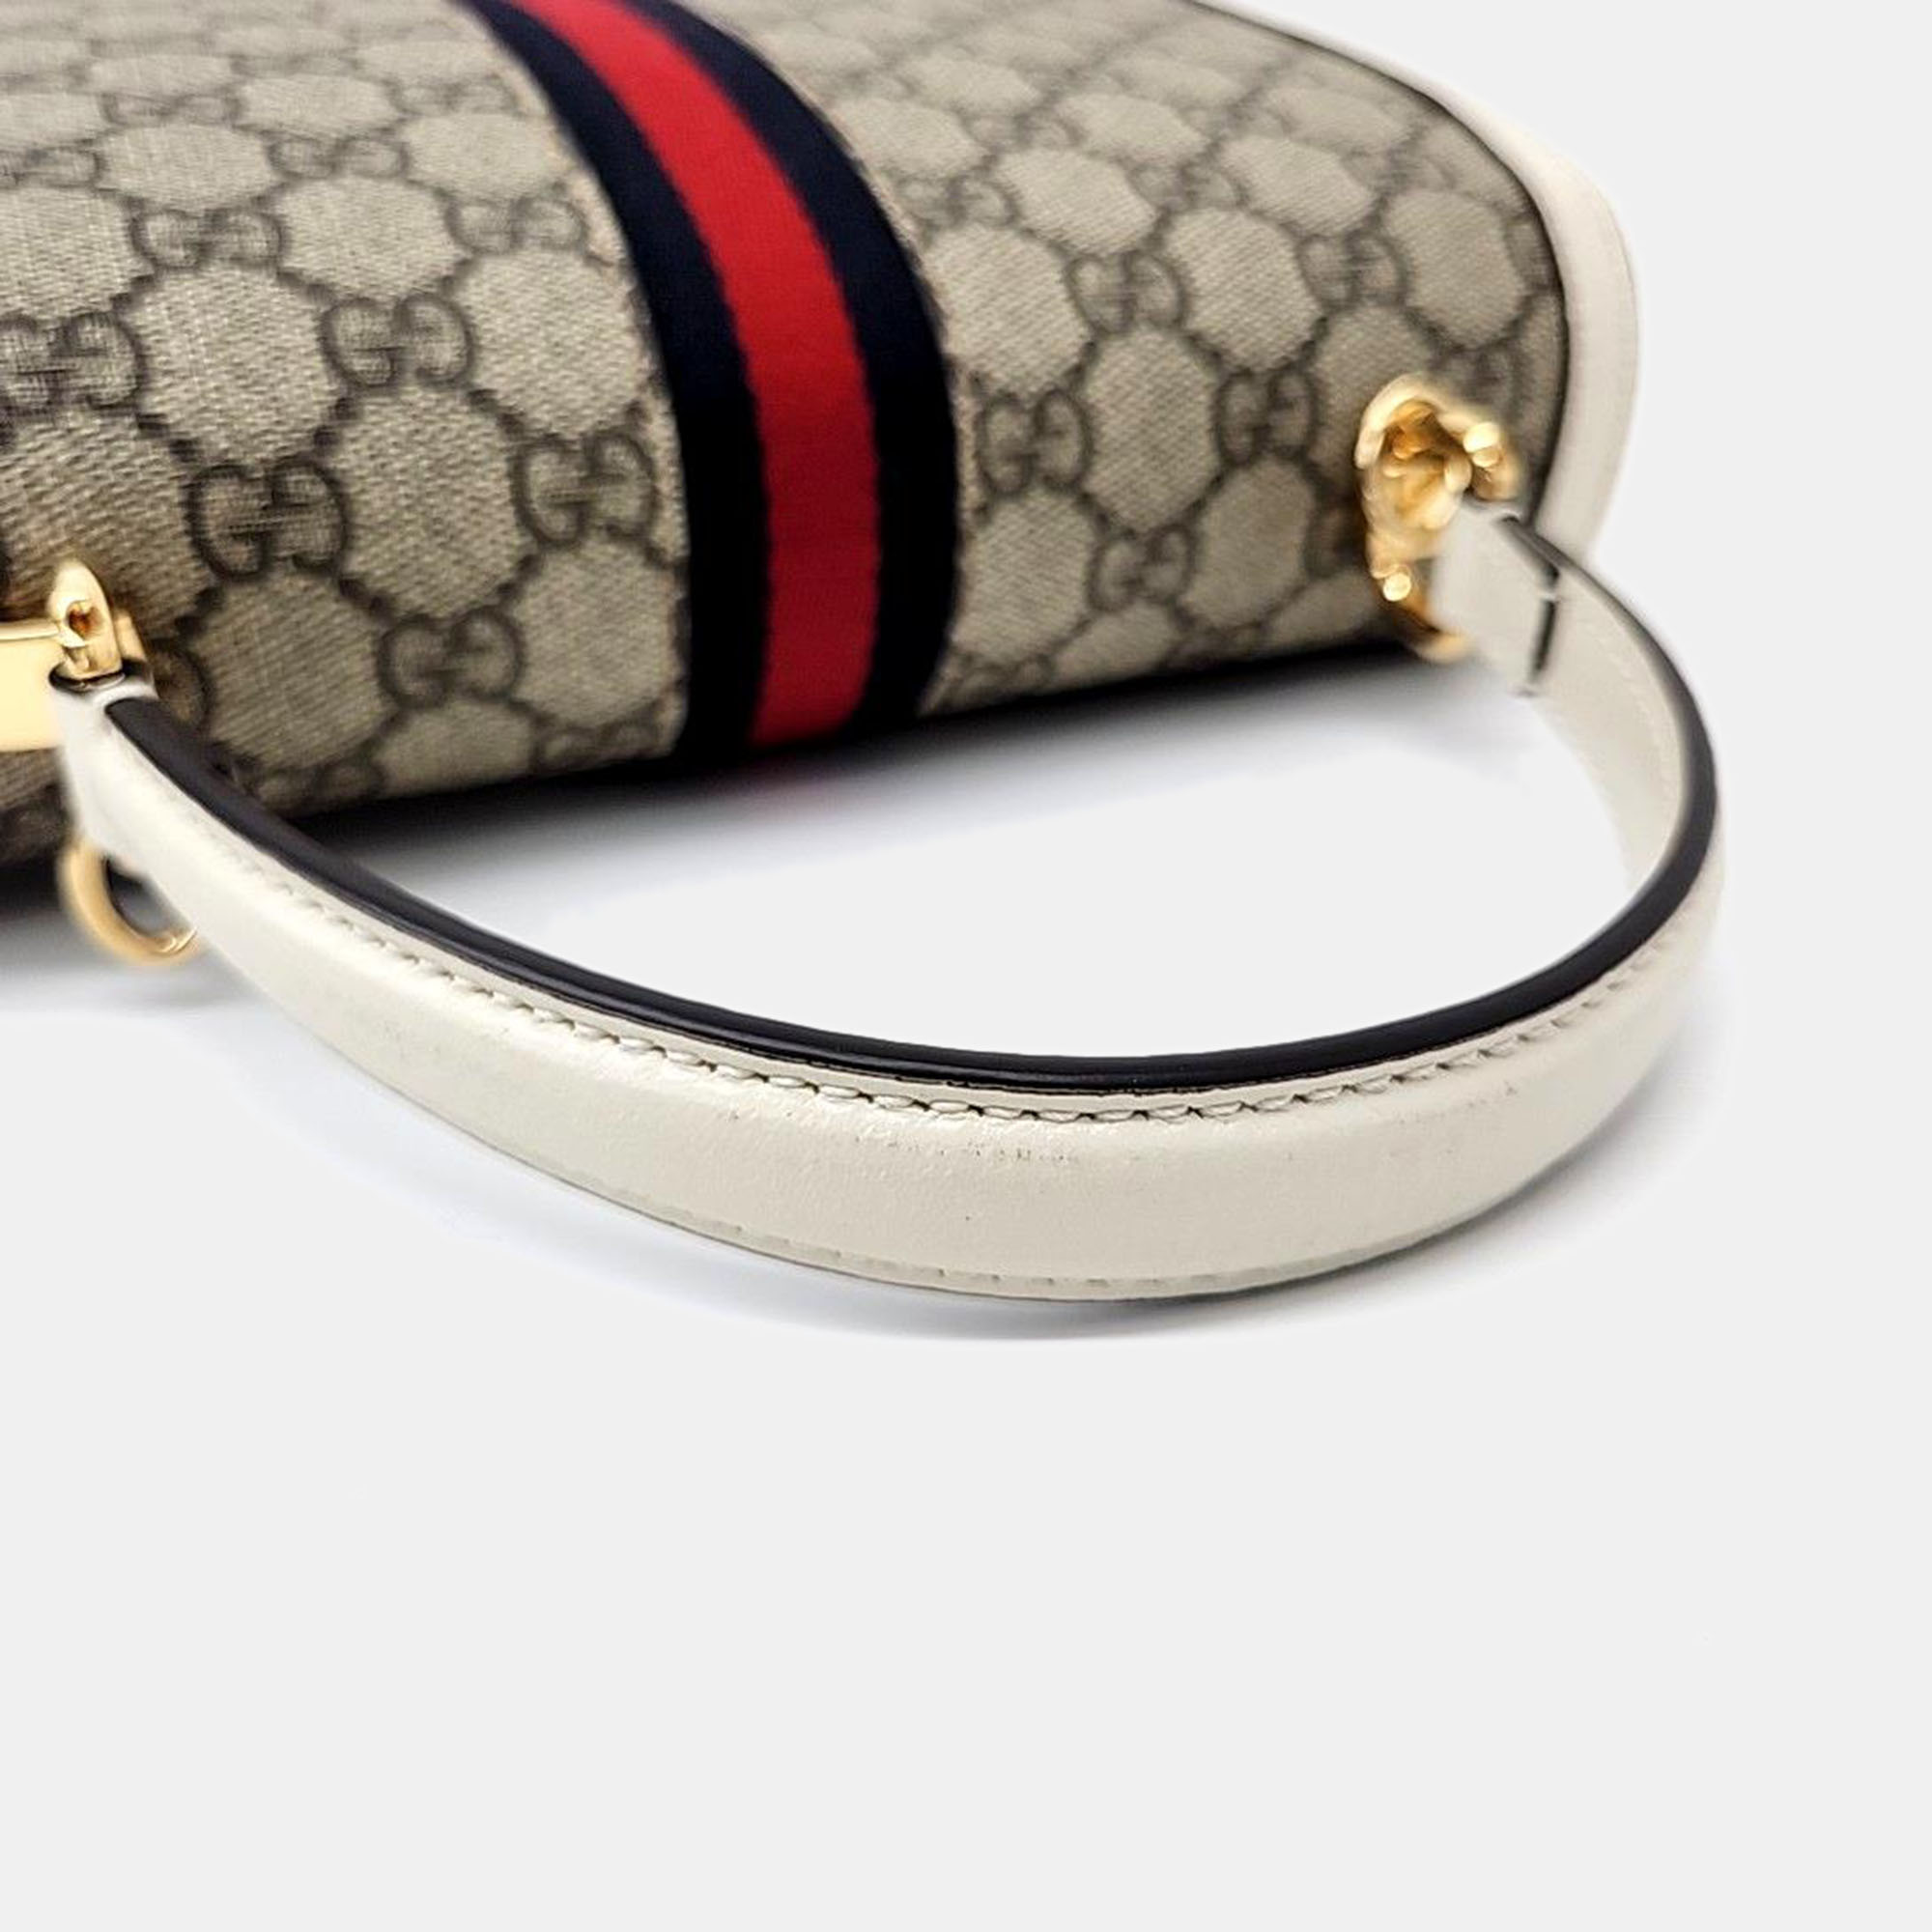 Gucci Ophidia Top Handle Bag (651055) Bag